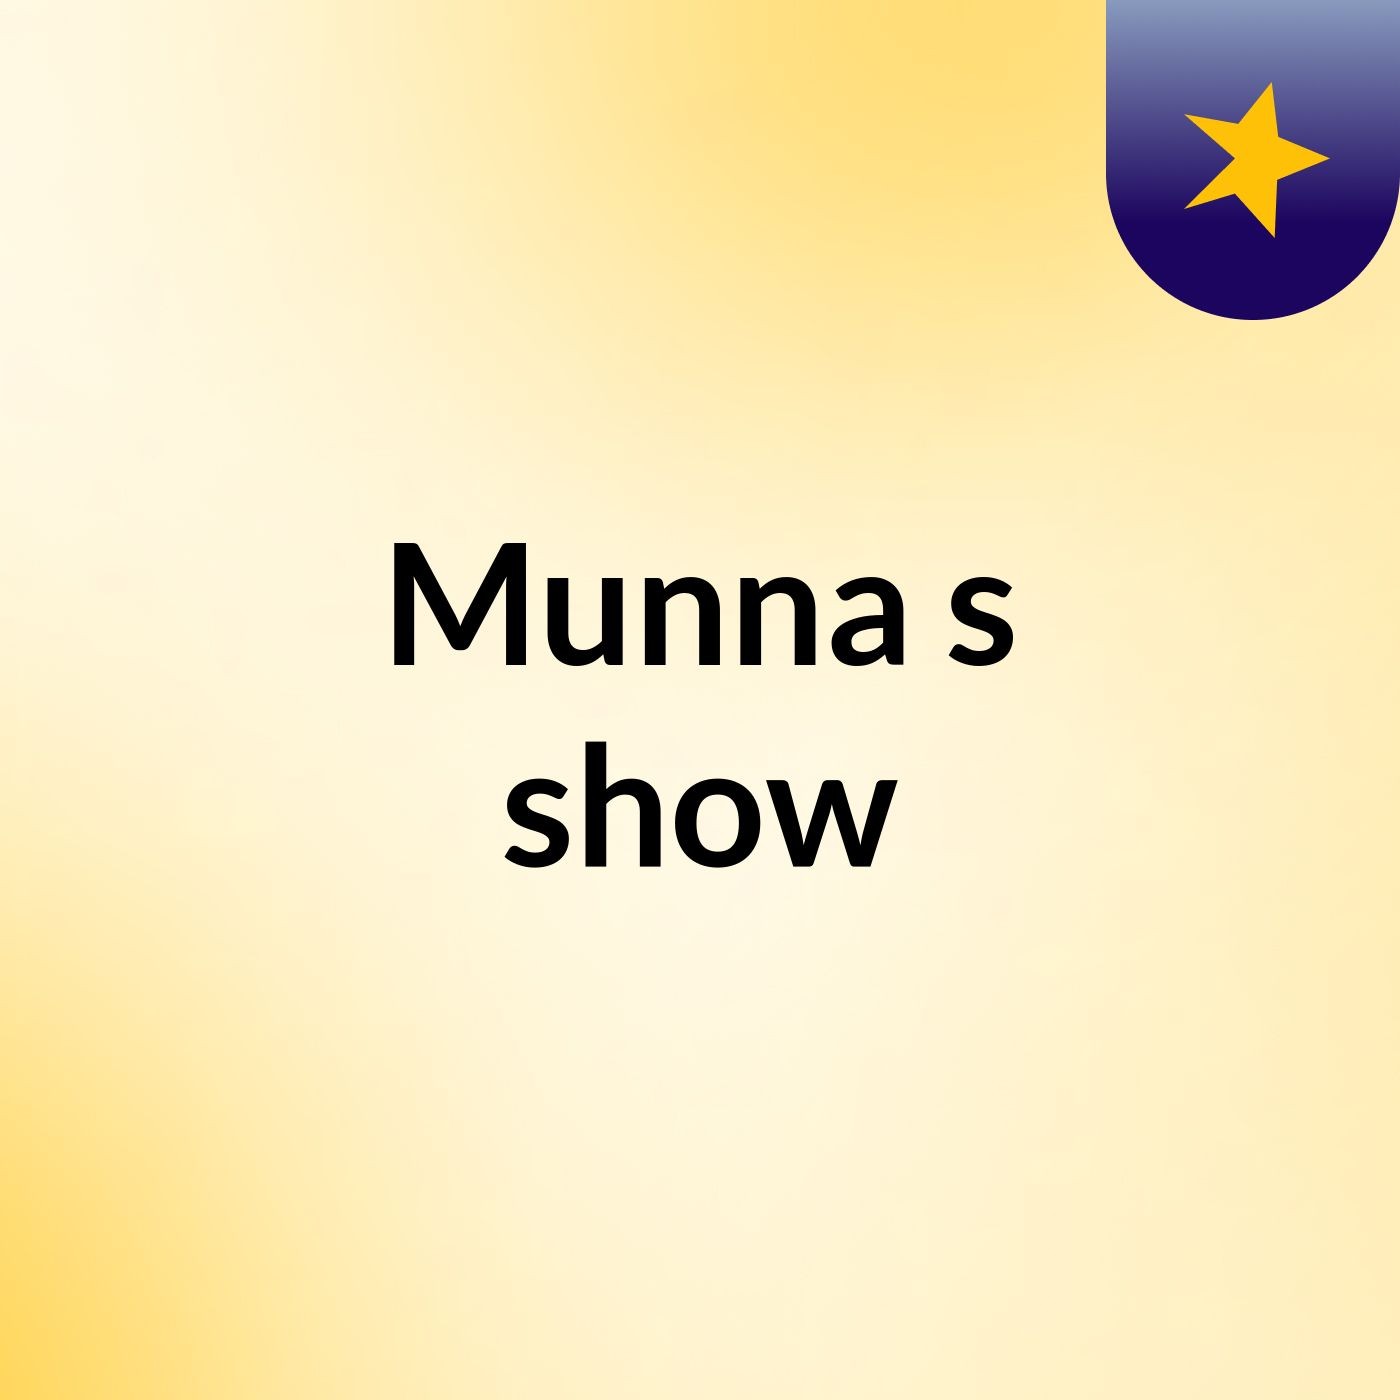 Munna's show